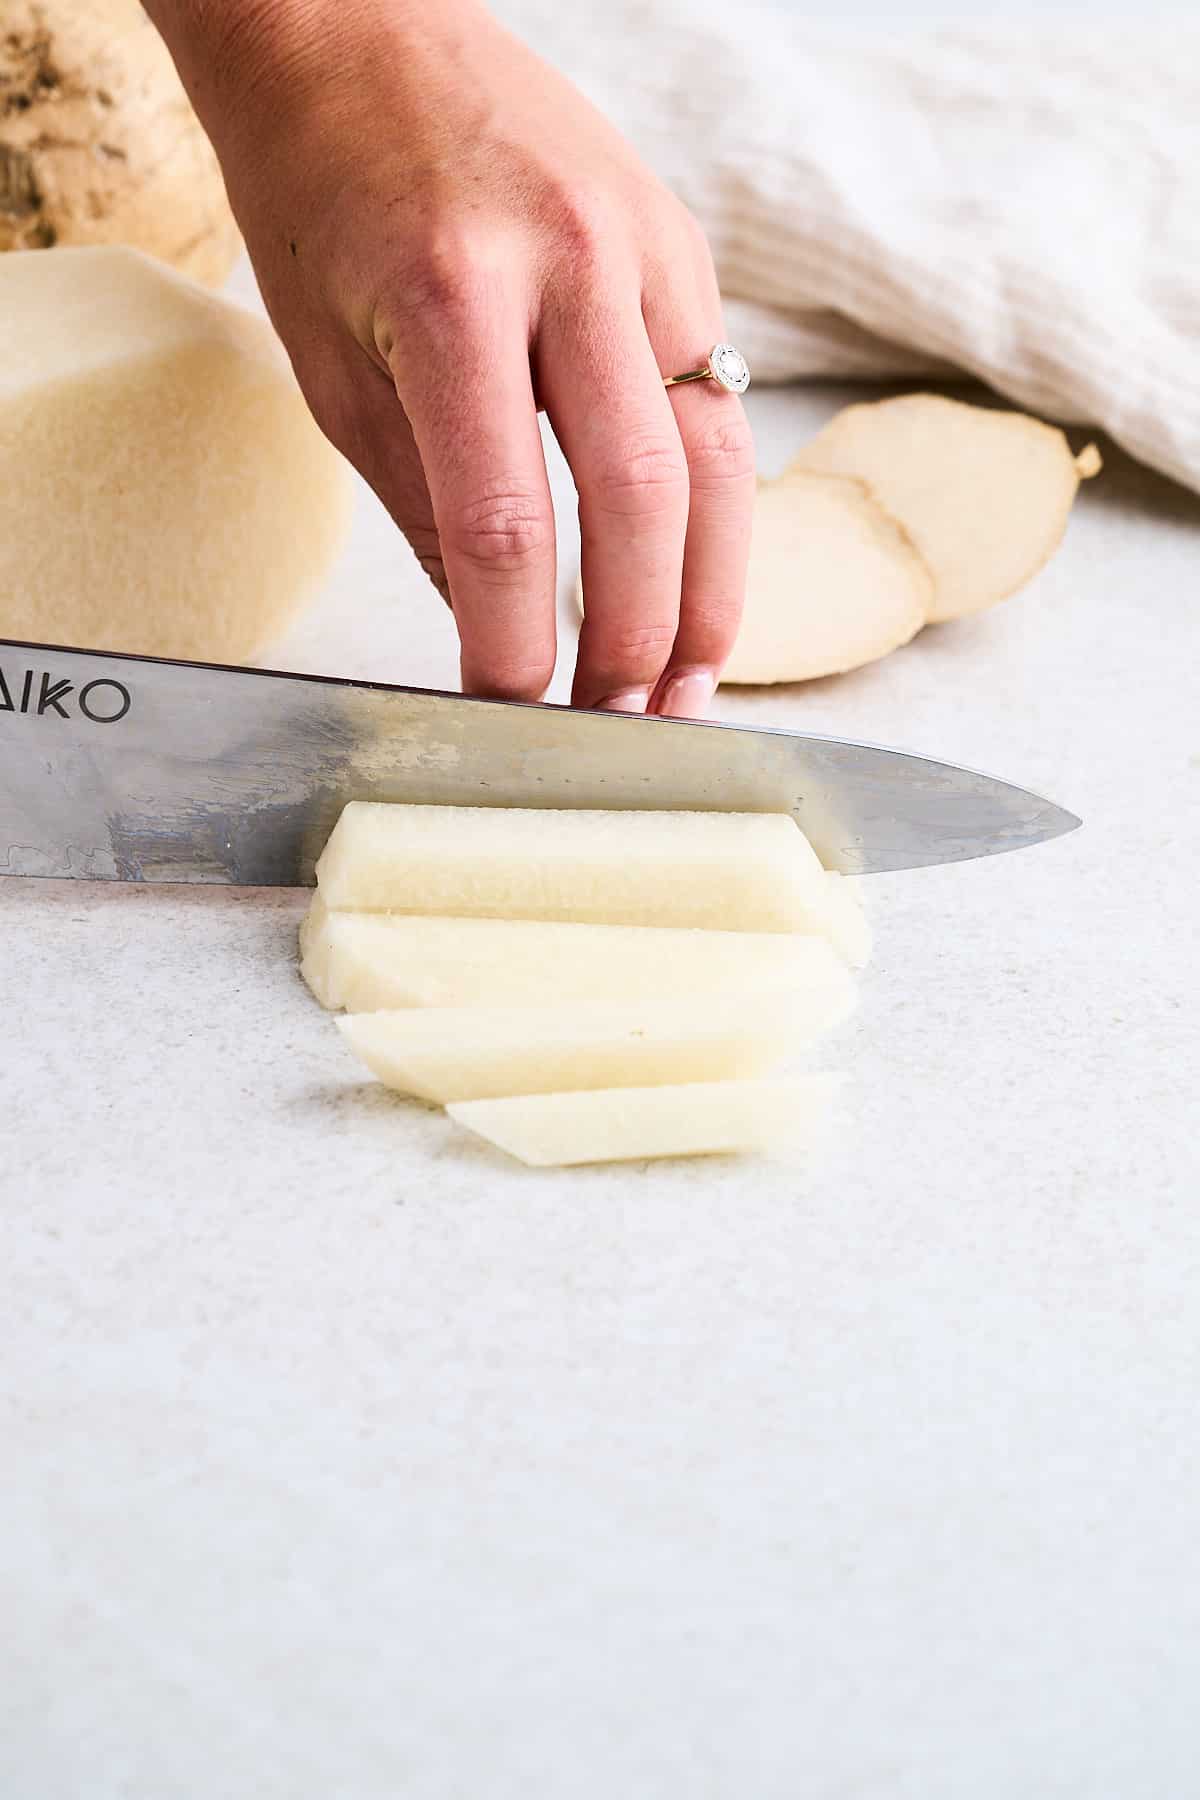 Cutting jicama into strips.